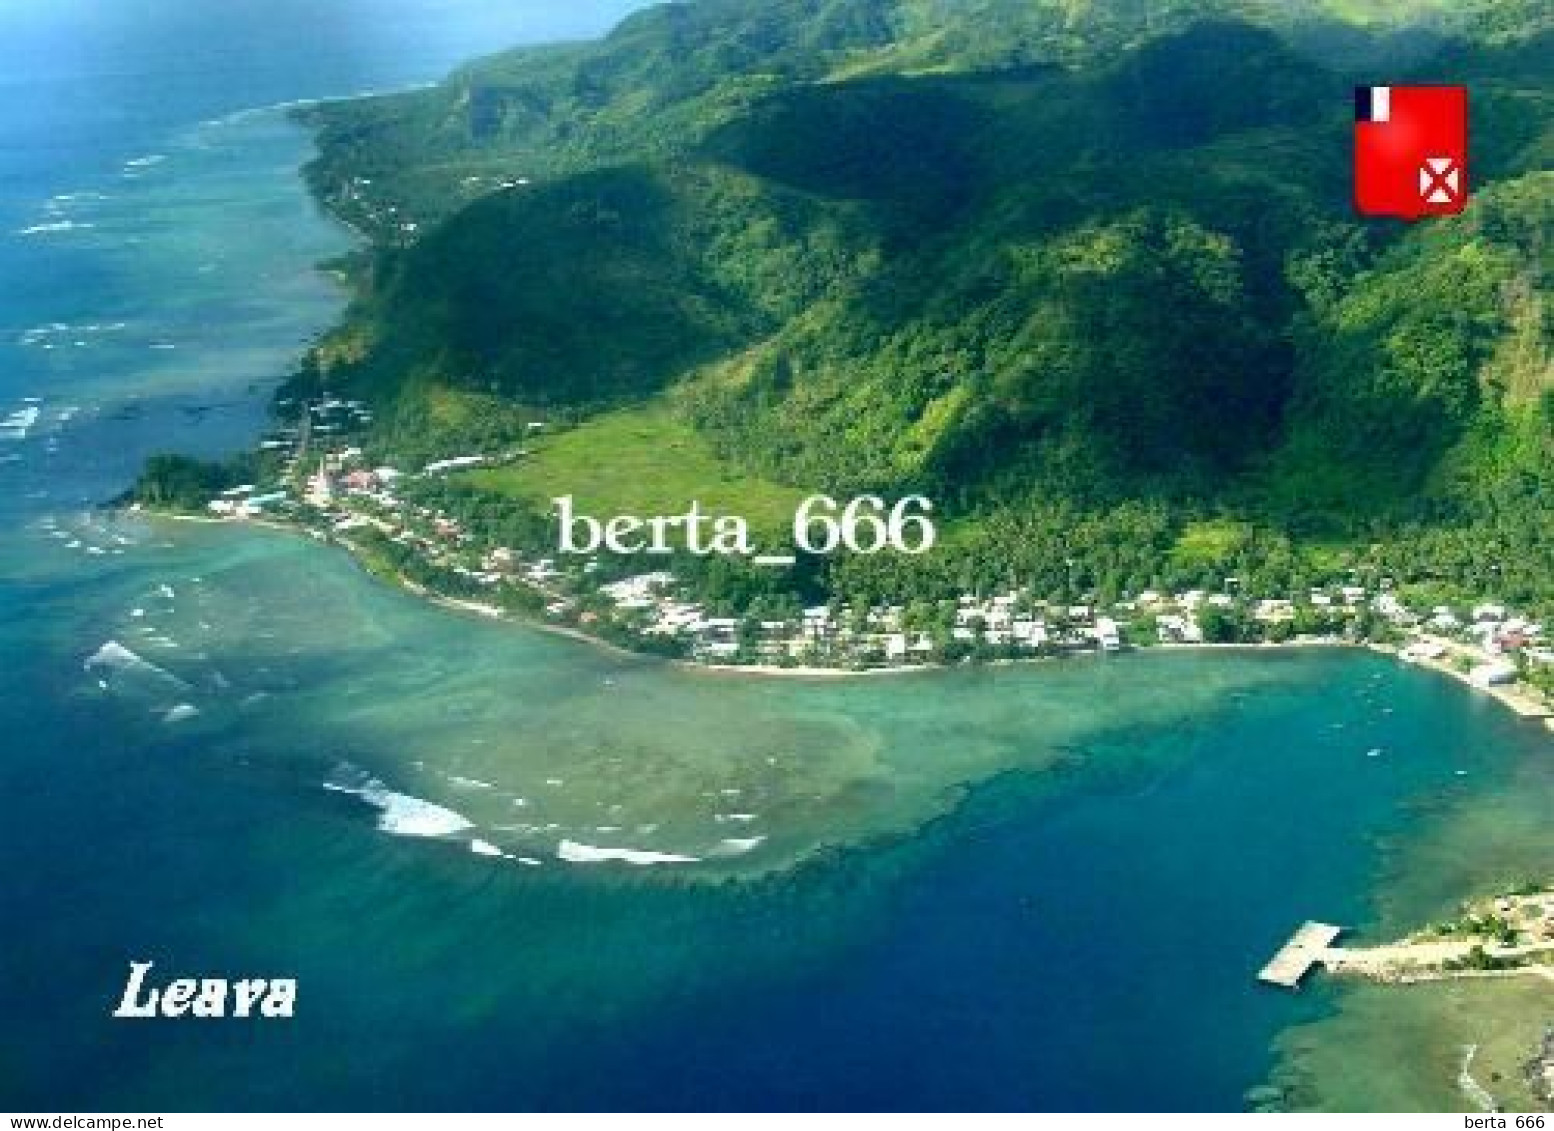 Wallis And Futuna Leava Aerial View New Postcard - Wallis Y Futuna